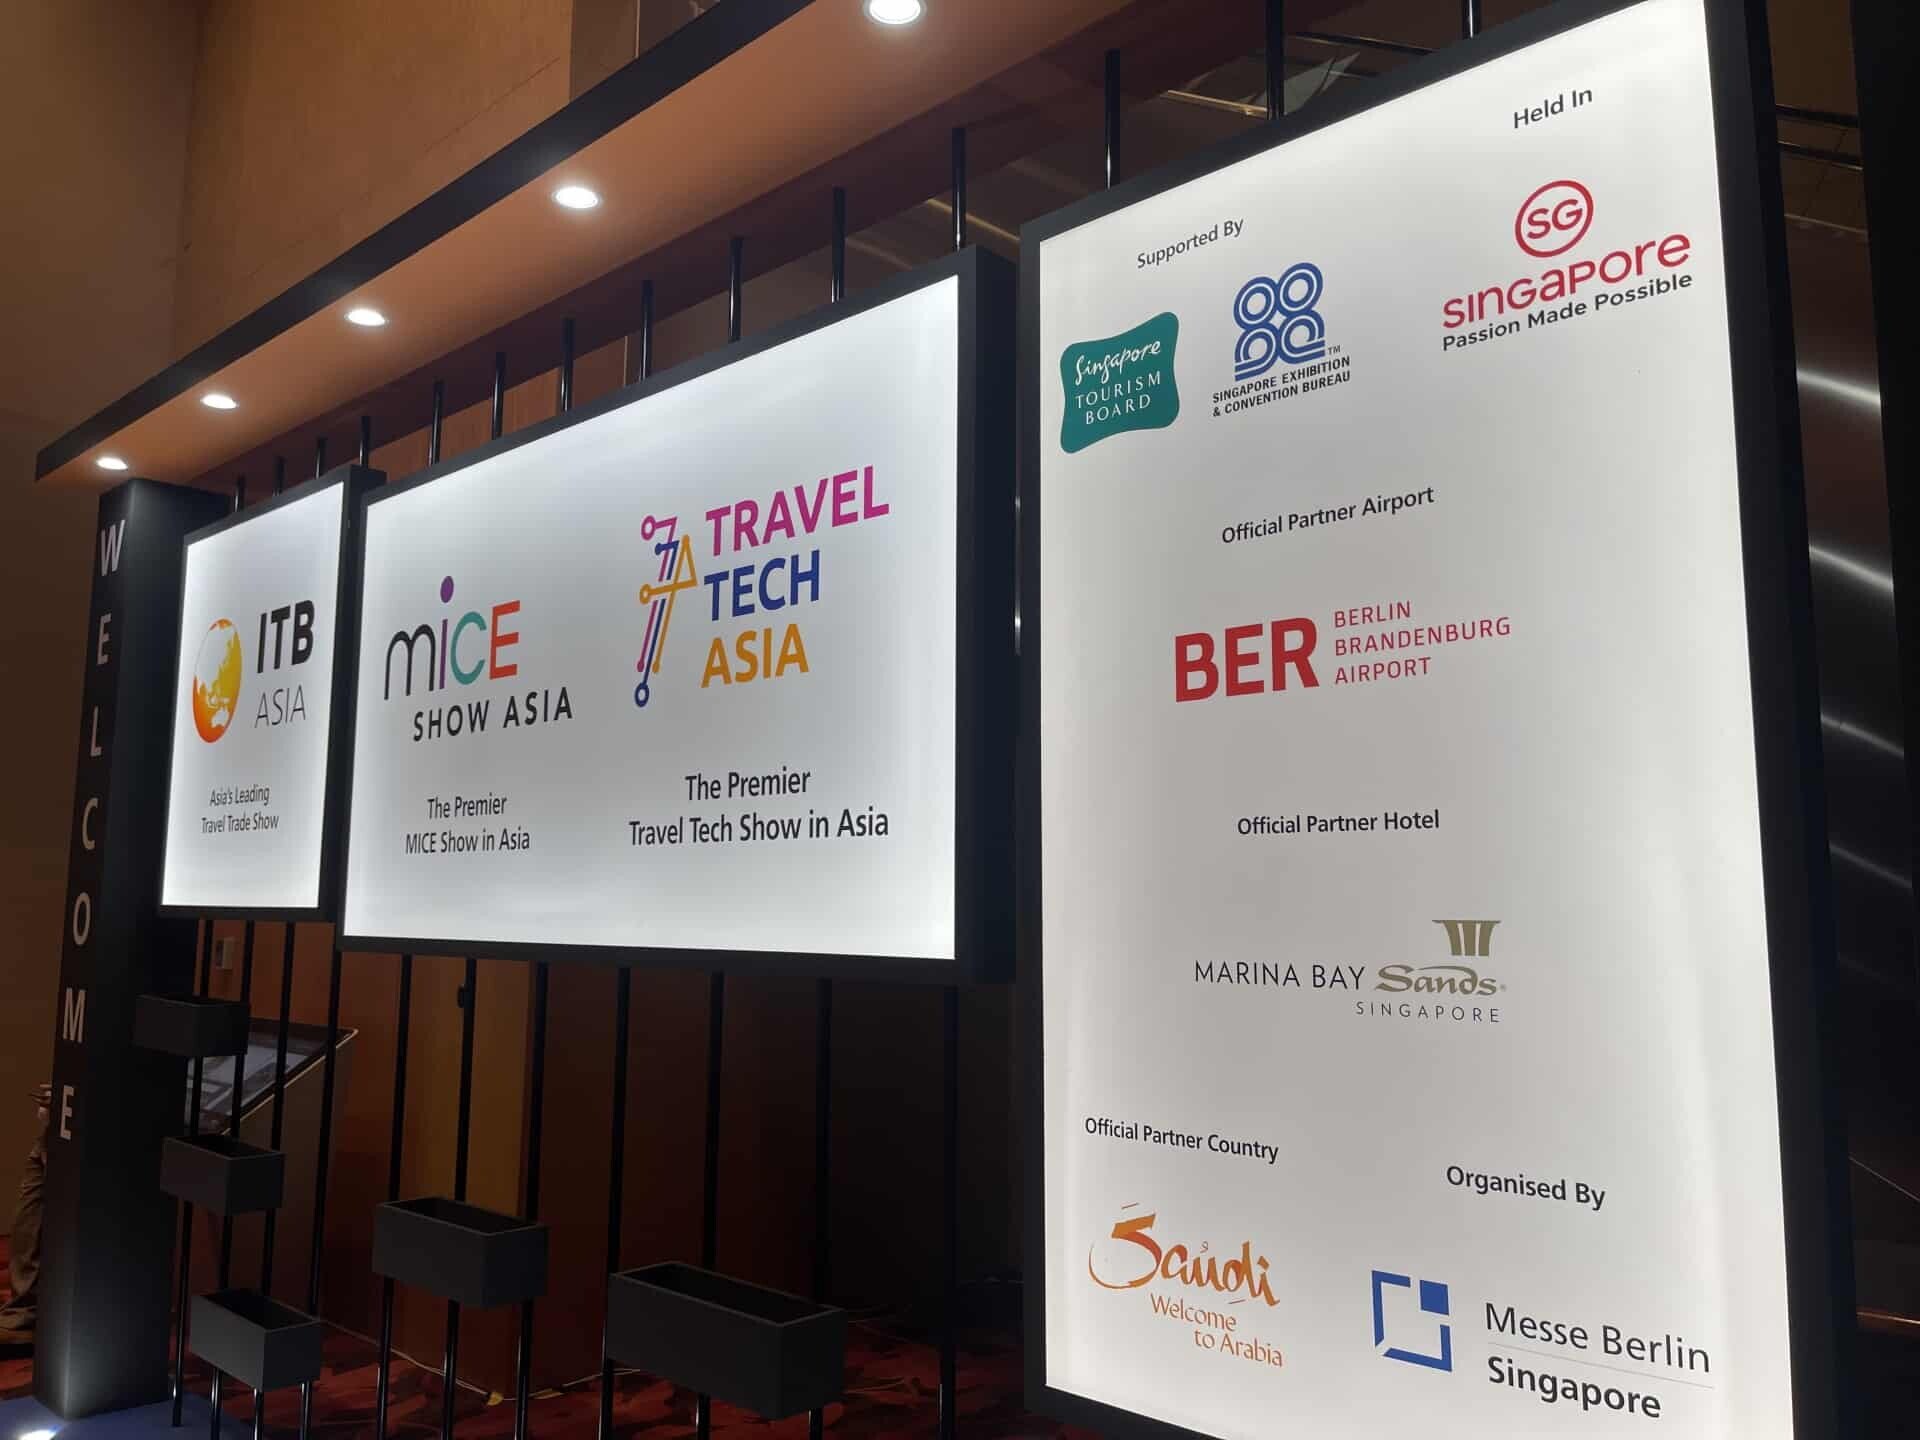 ITB Asia MICE show Asia Travel Tech Asia 2022